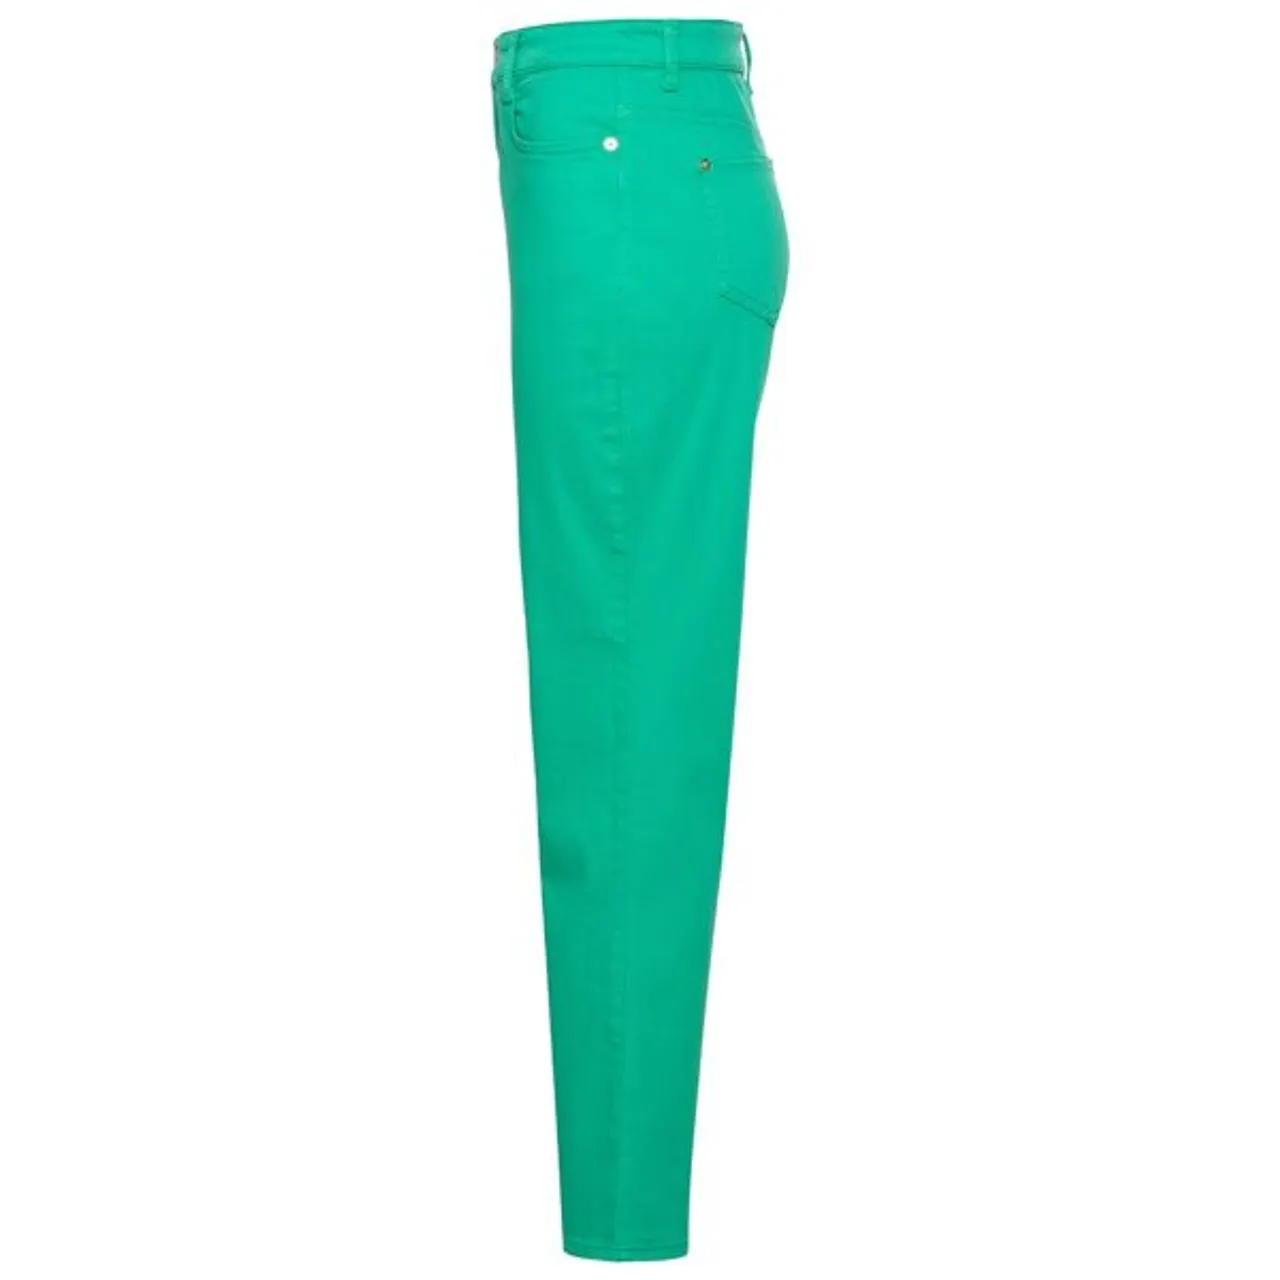 Bequeme Jeans MAC "Stella" Gr. 38, Länge 30, grün (bright green) Damen Jeans High-Waist-Jeans